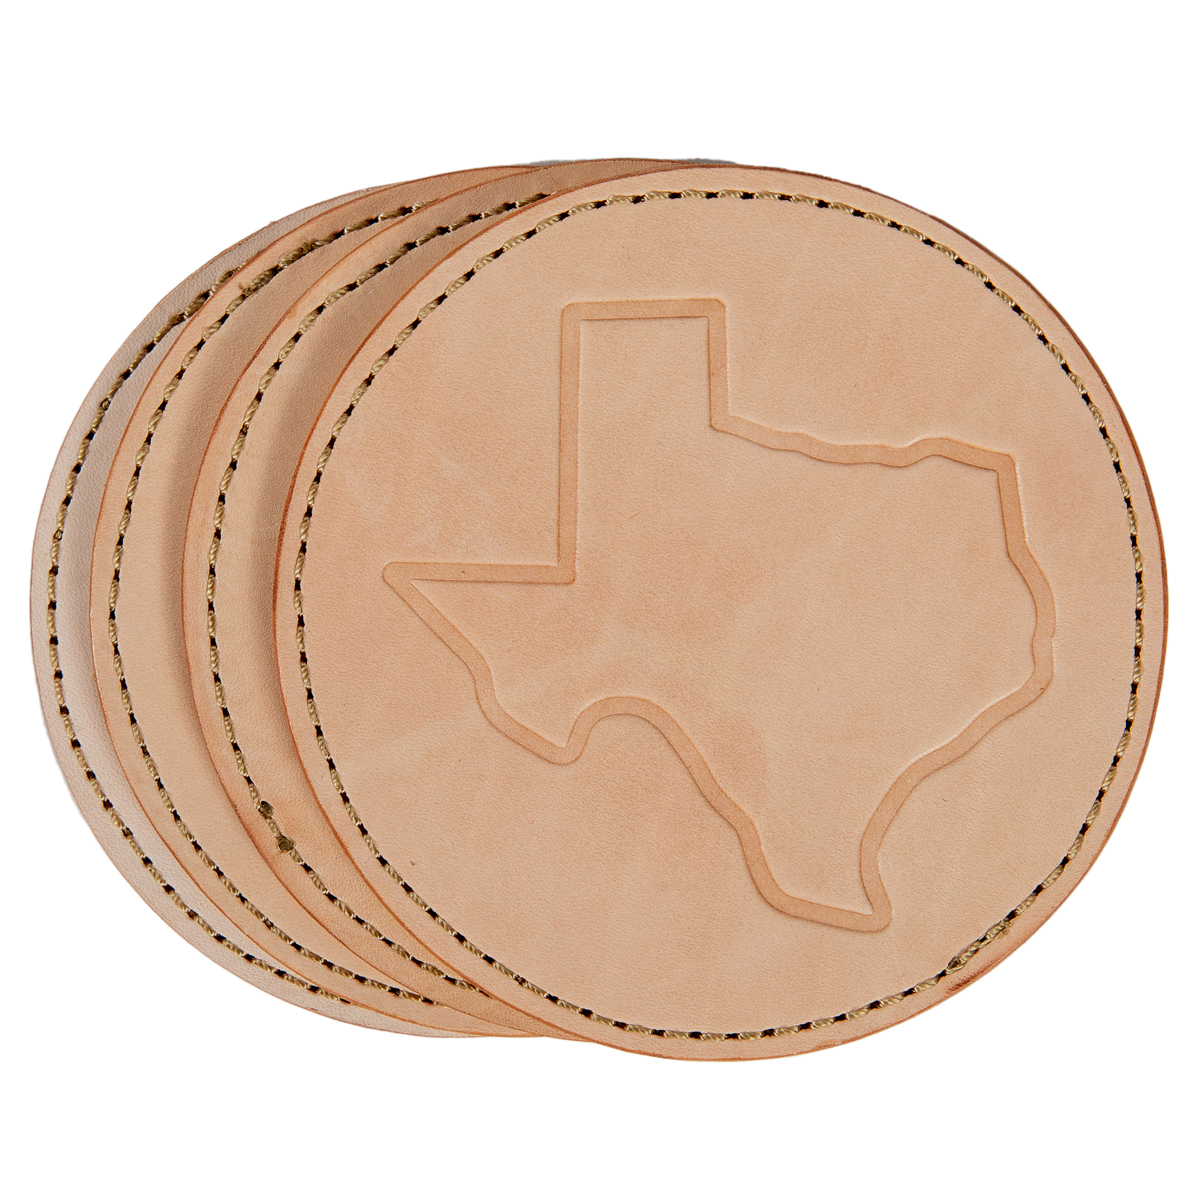 Leather Texas Coasters, Set of 4